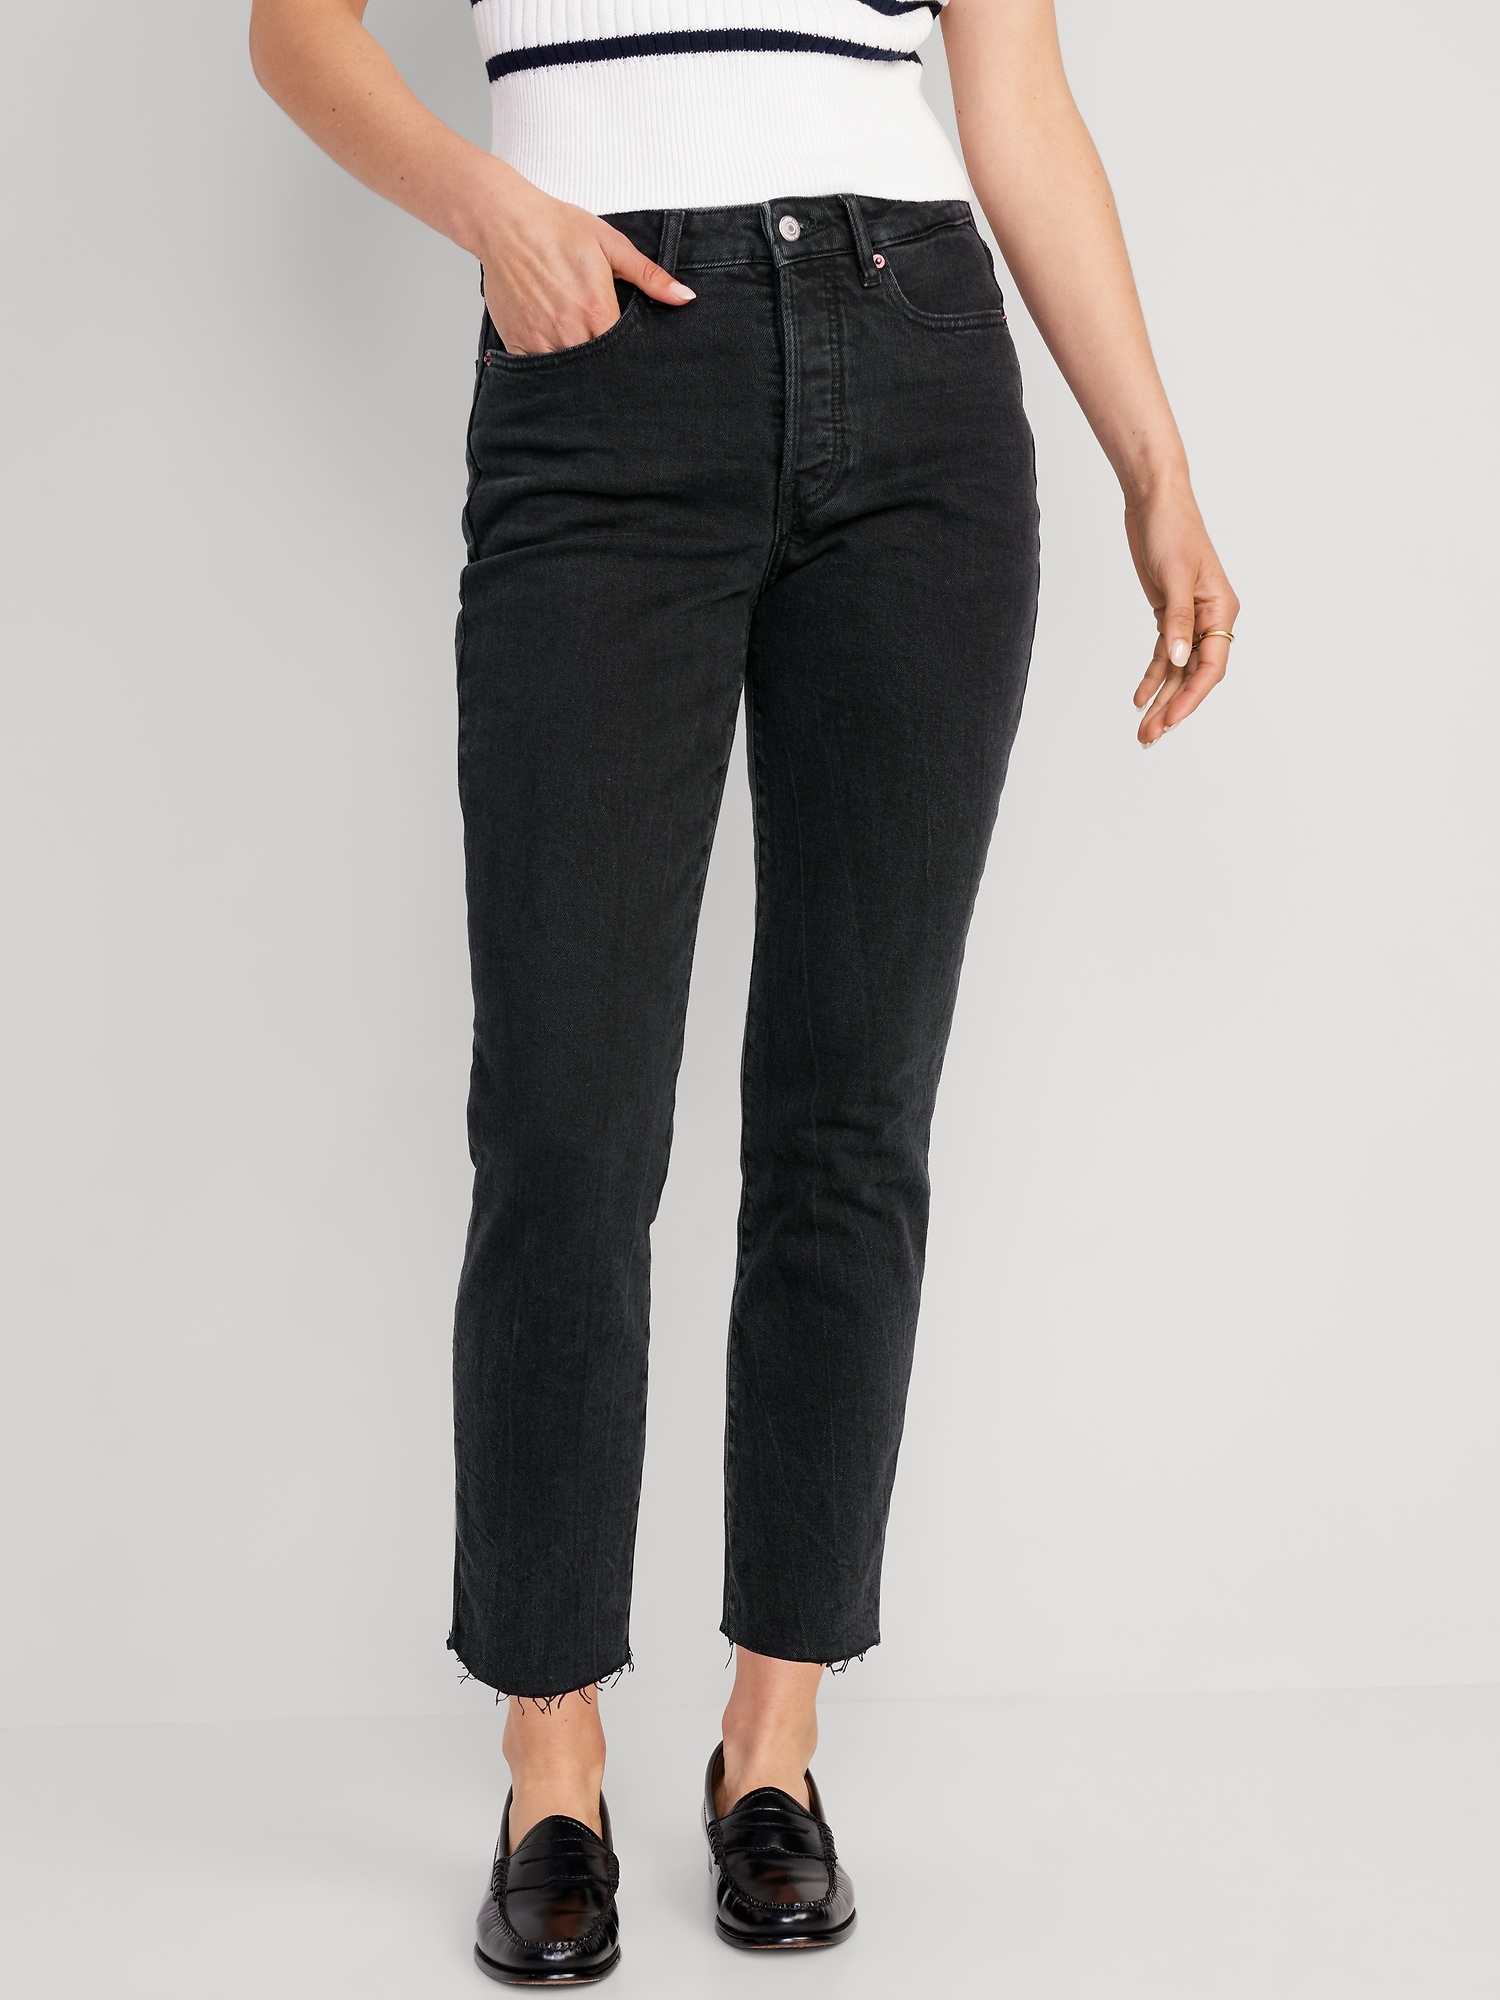 High-Waisted OG Straight Black Cutoff Jeans